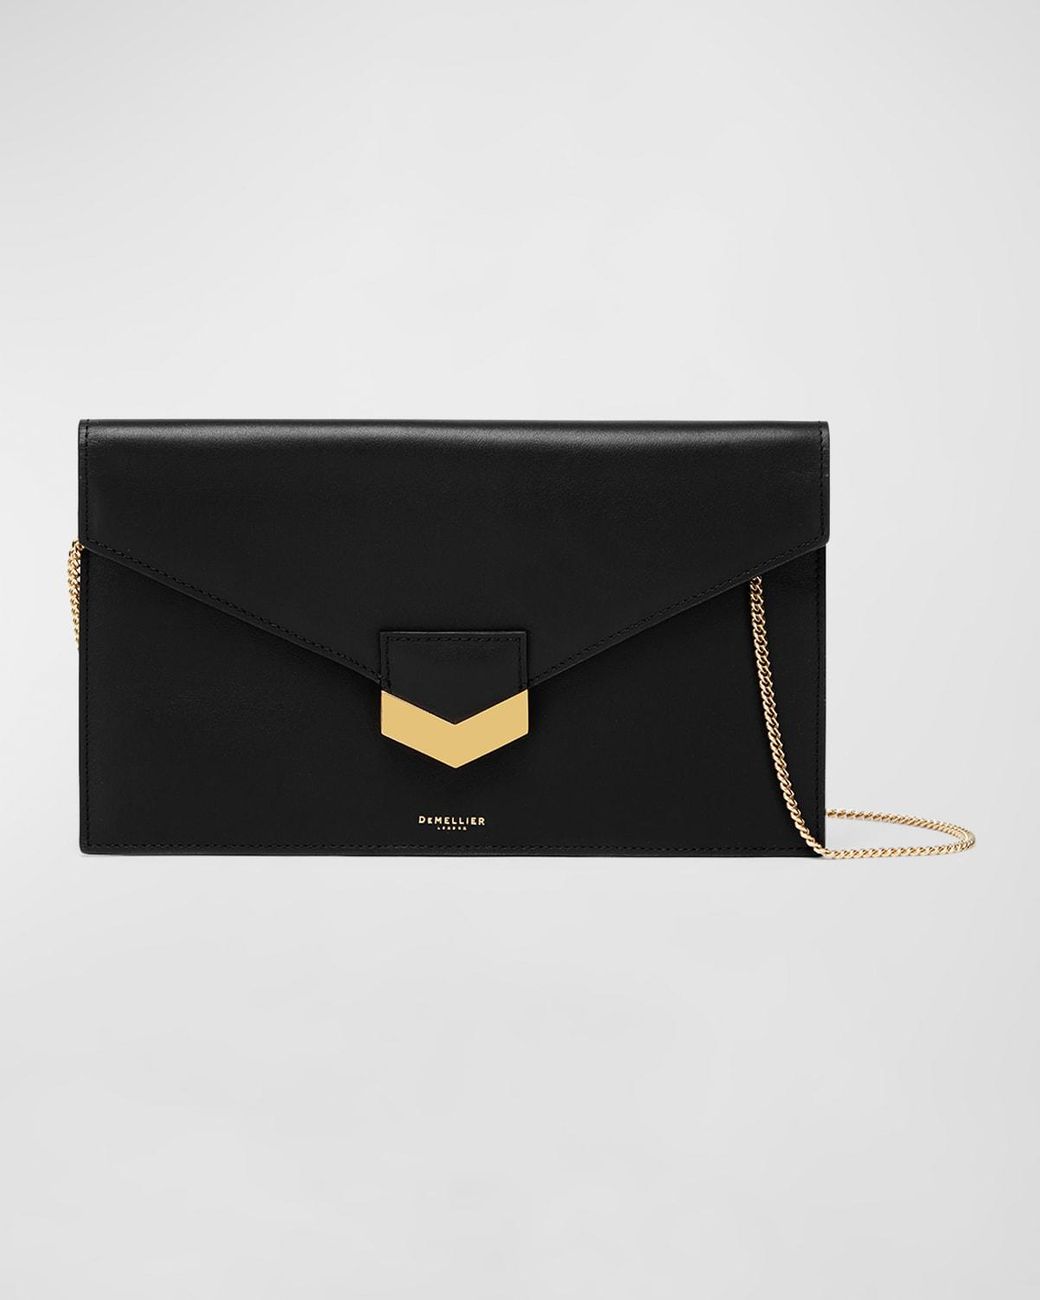 DeMellier London Envelope Metallic Clutch Bag in Black | Lyst